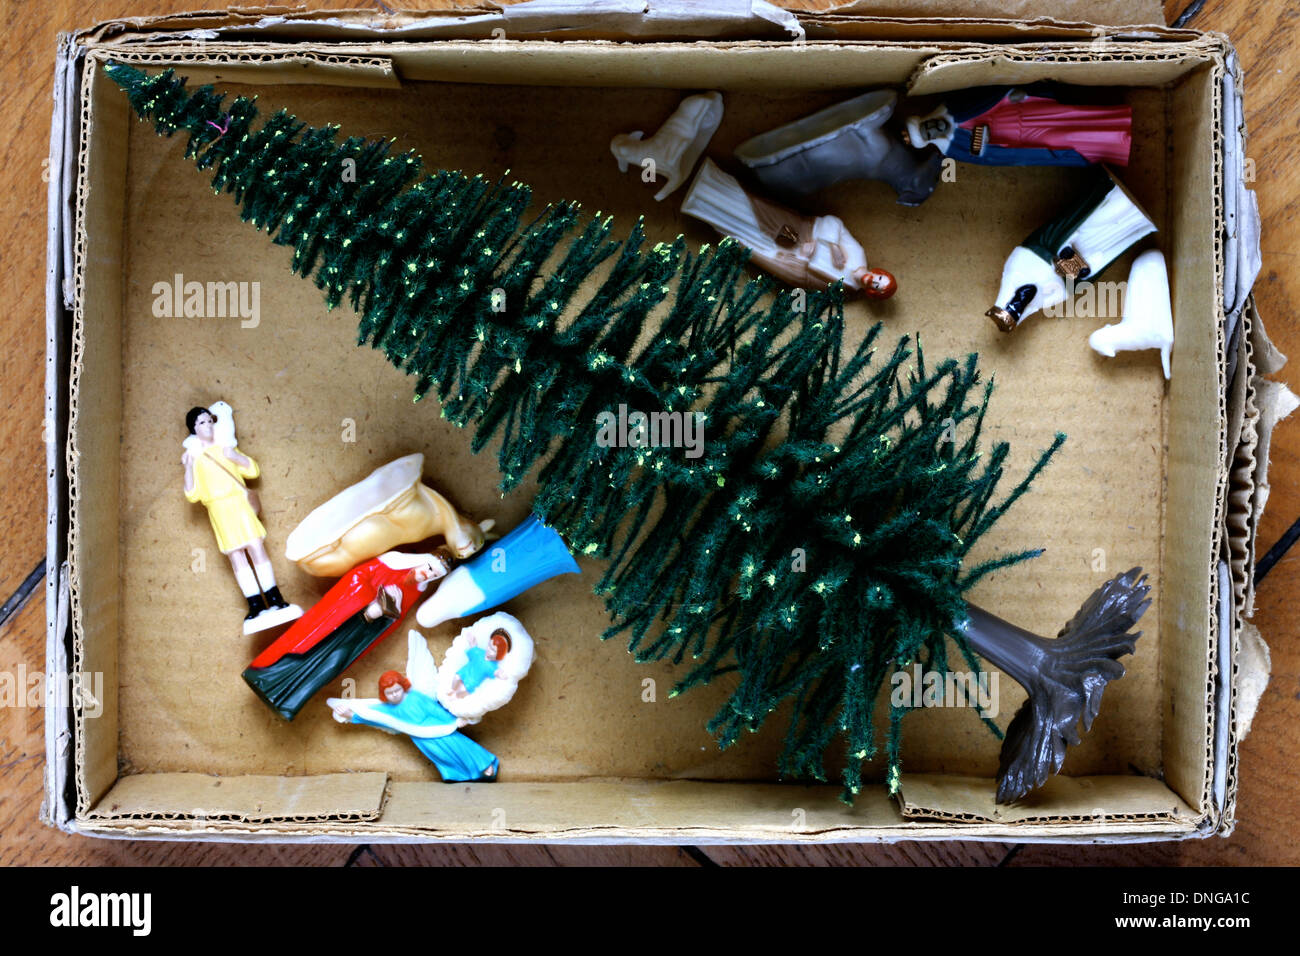 Weihnachten, Weihnachtsfiguren, Krippe, Krippenfiguren, Tanne, Schachtel, Verpackung, abraeumen Banque D'Images